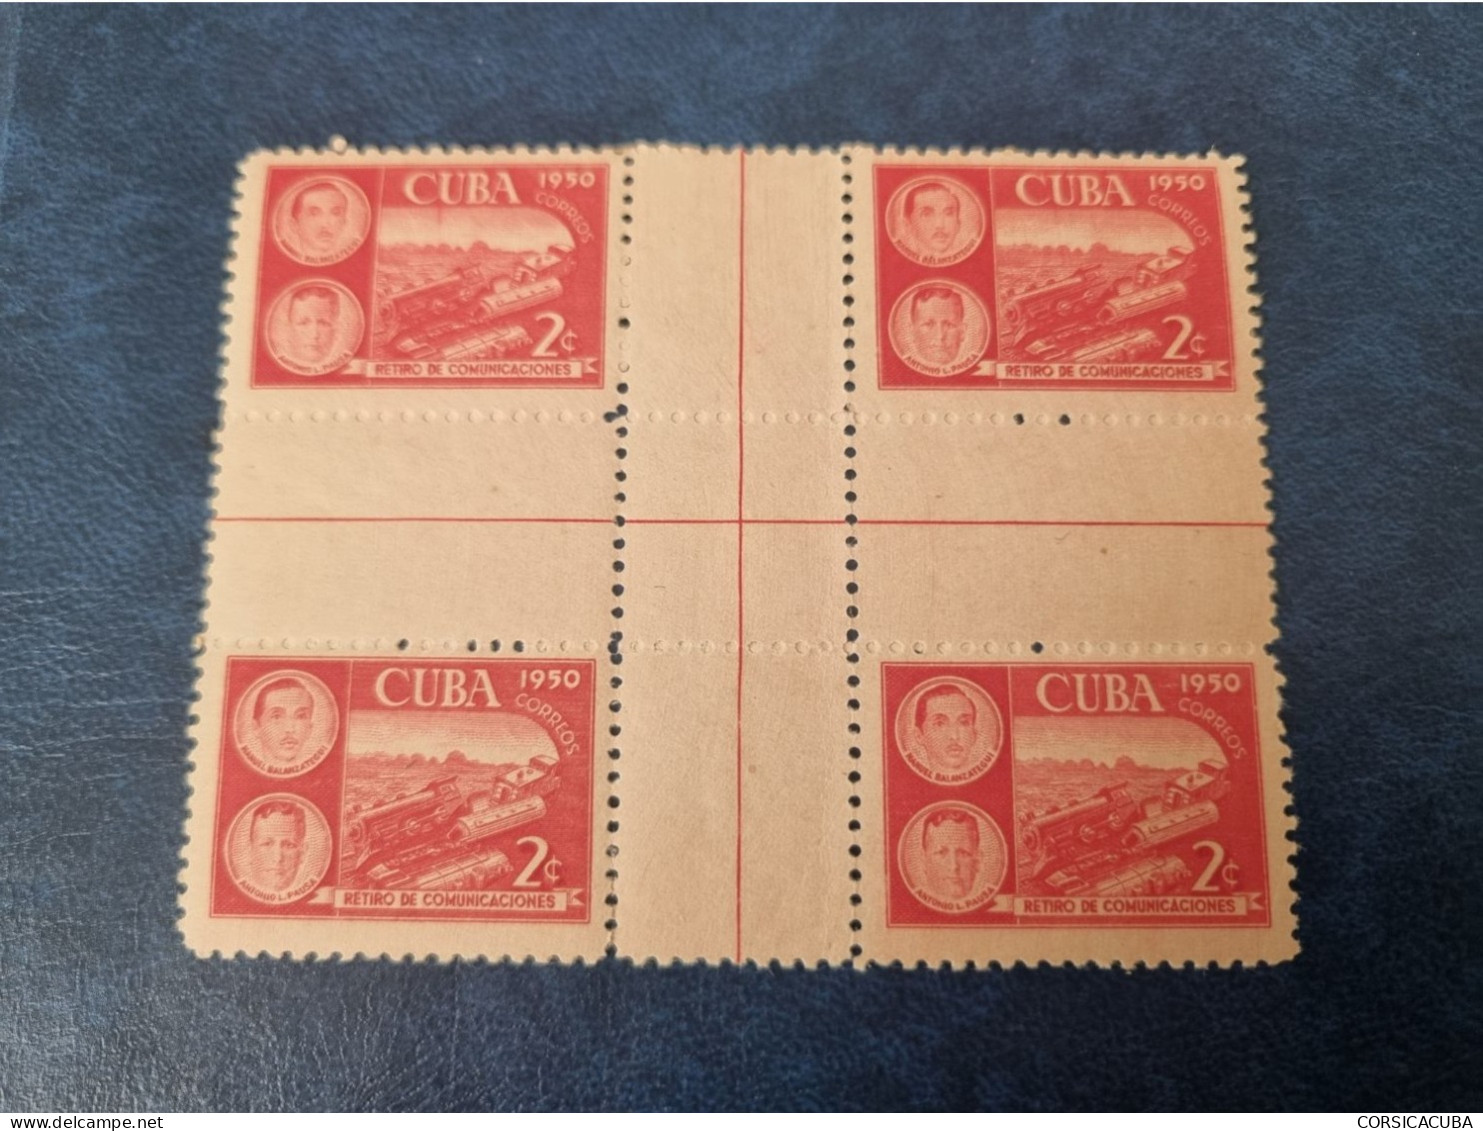 CUBA  NEUF  1950   RETIRO  DE  COMUNICACIONES  //  PARFAIT  ETAT  //  1er  CHOIX  // Centros De Hoja - Nuovi